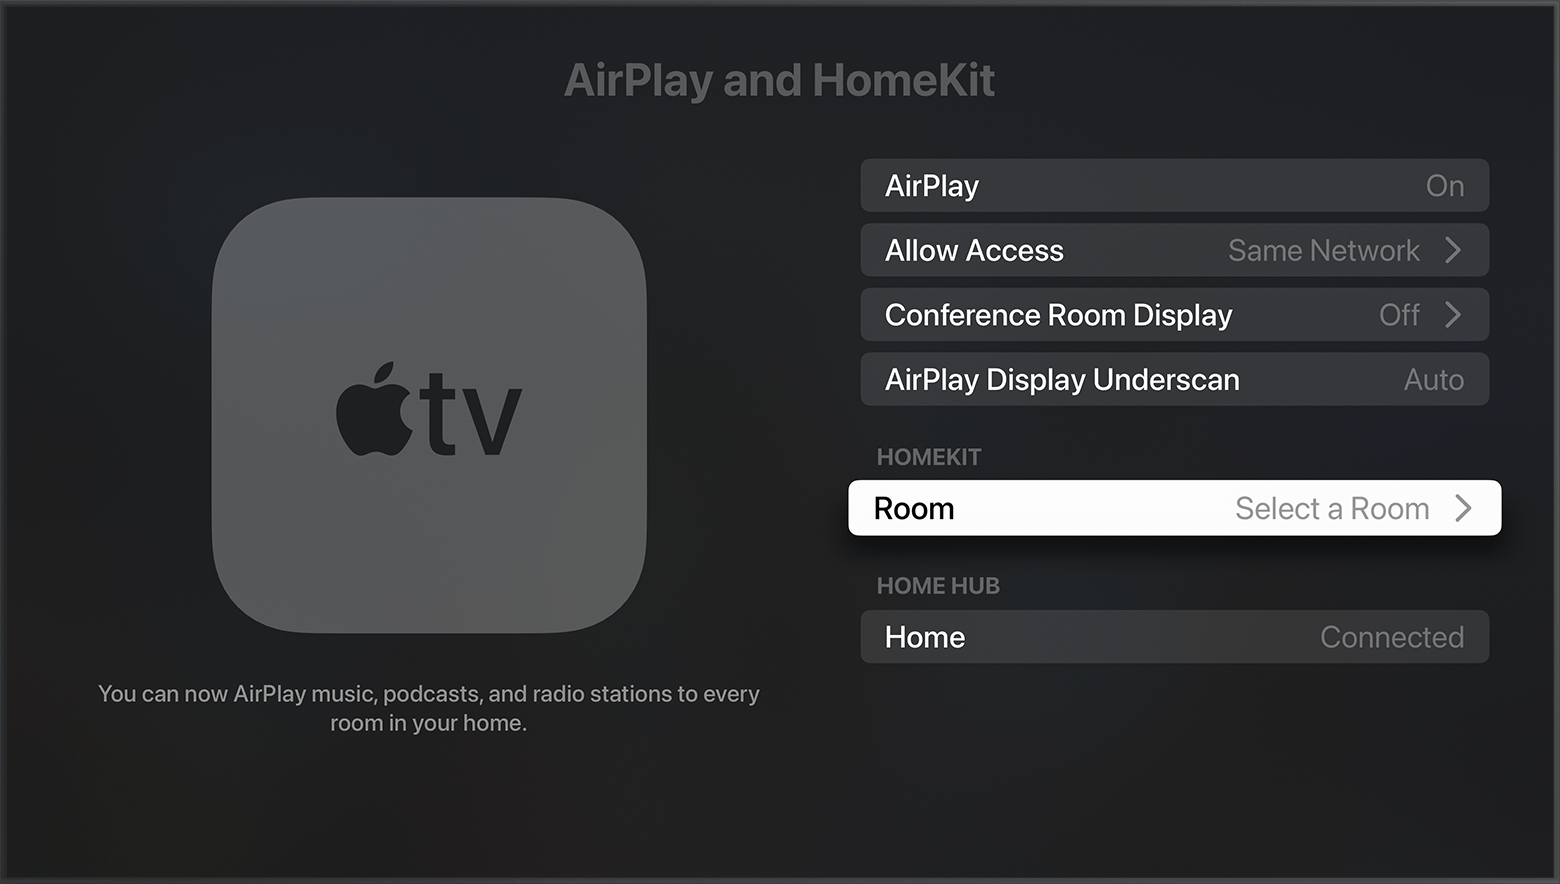 Room appears under HomeKit on the AirPlay and HomeKit screen in Apple TV settings